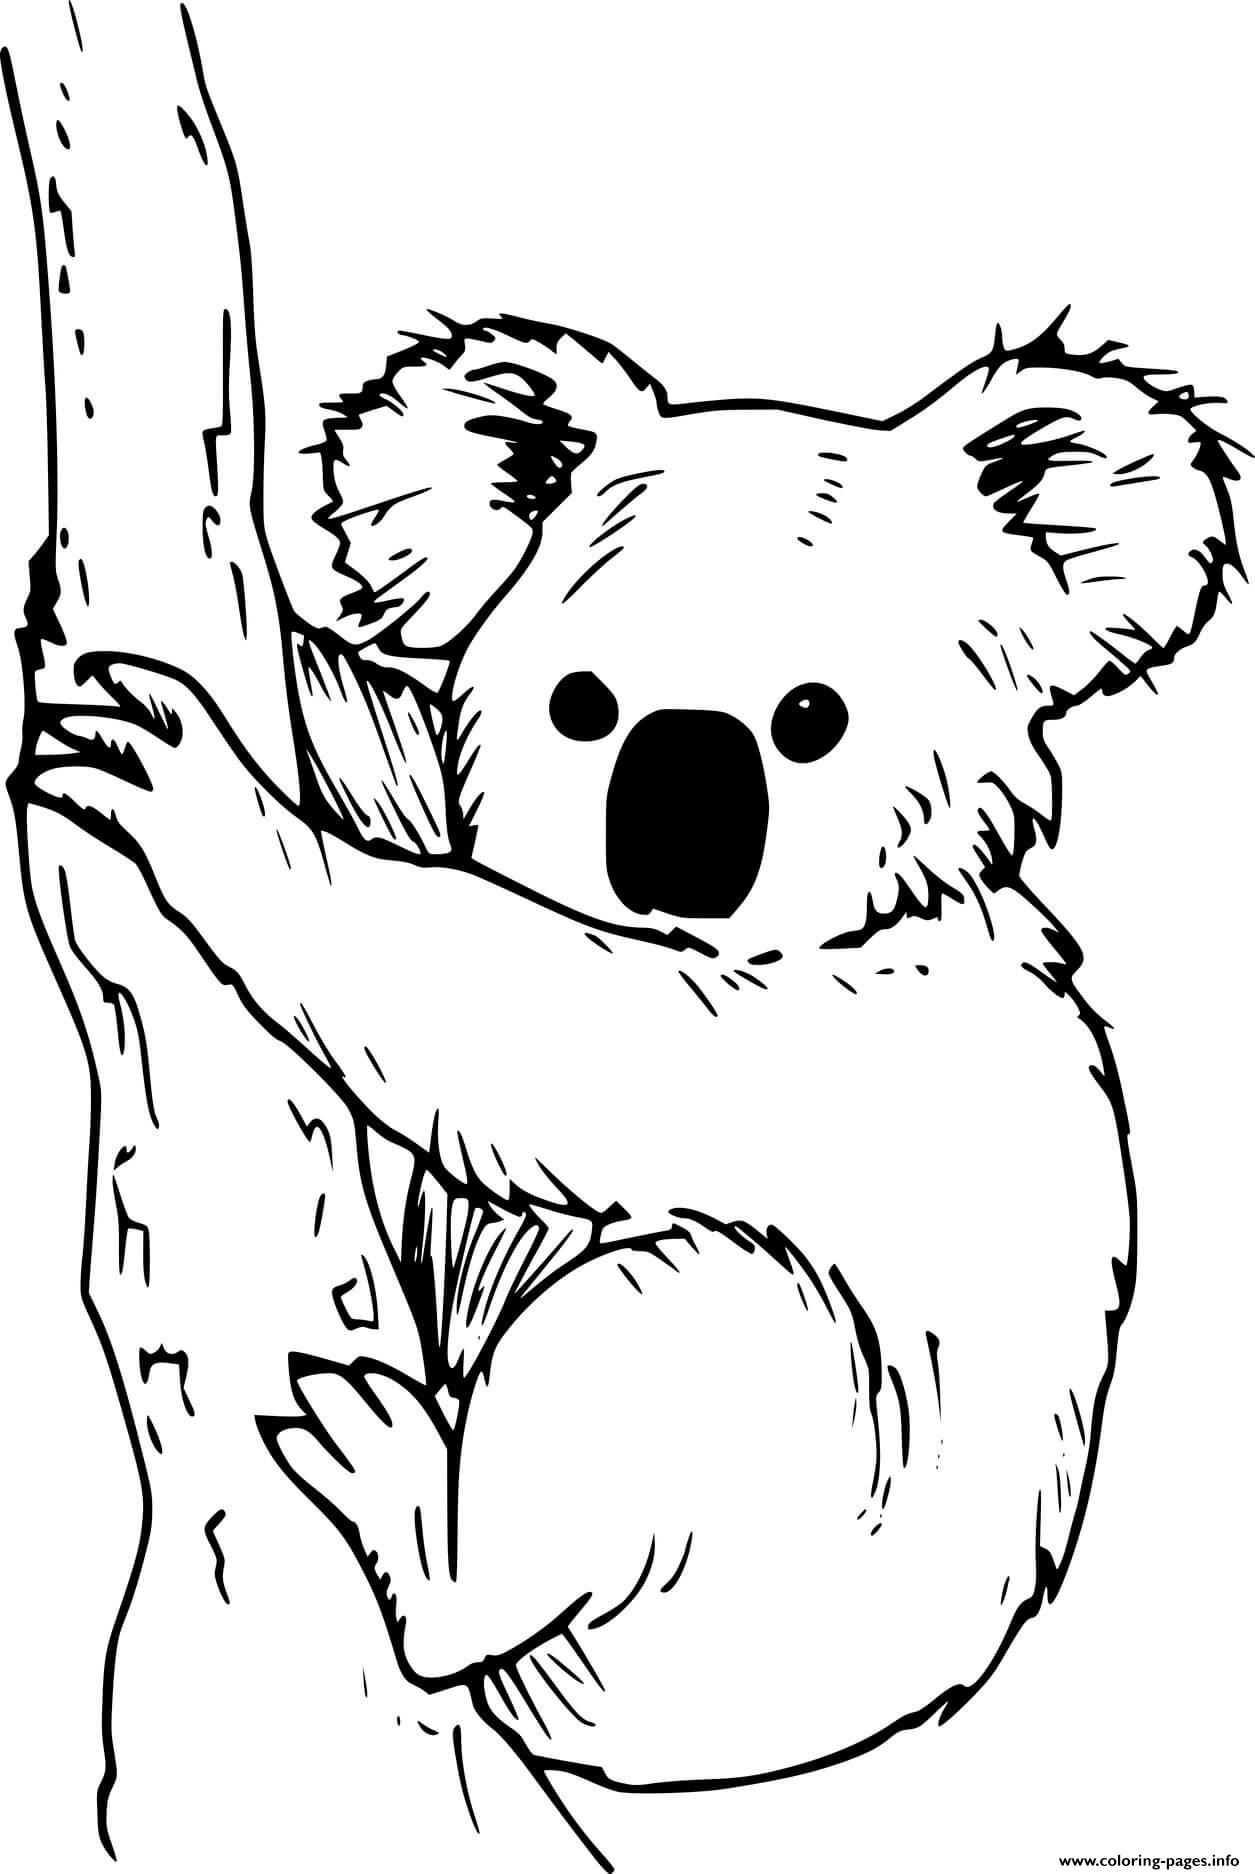 Realistic Koala Climbing The Tree coloring